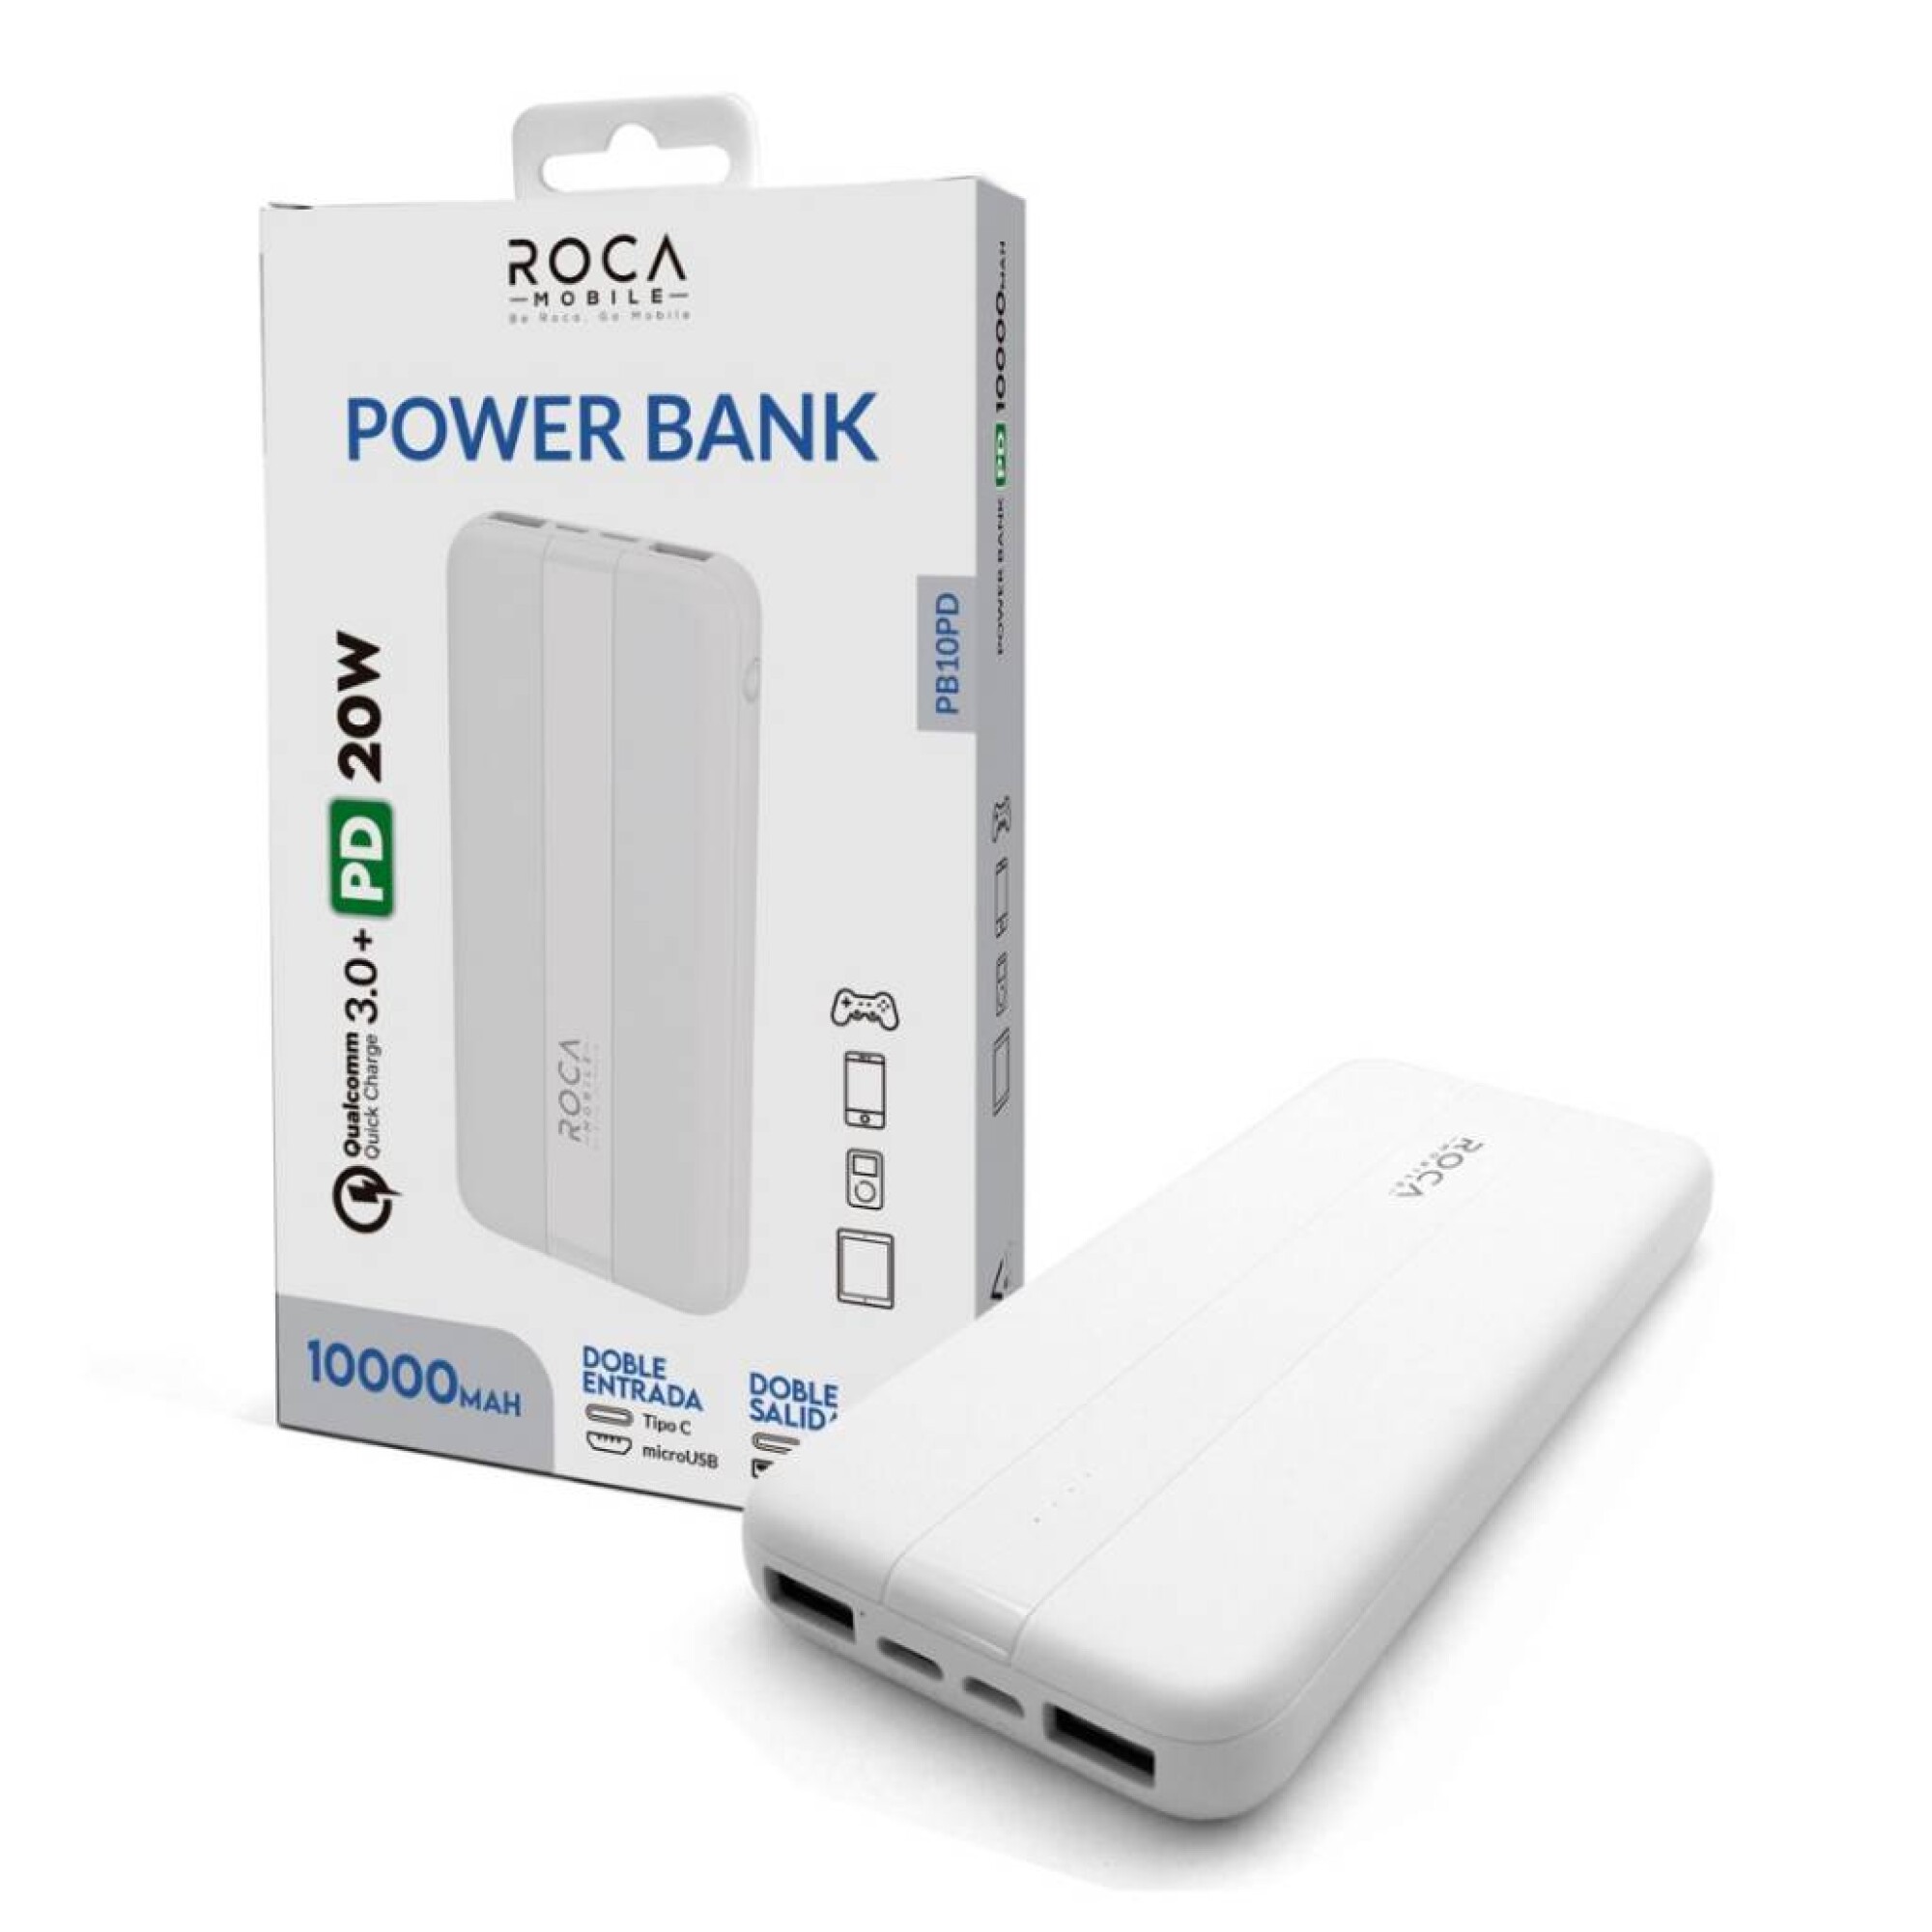 Power Bank 10000 mAh Batería Externa Smartphone Tablet Cargador